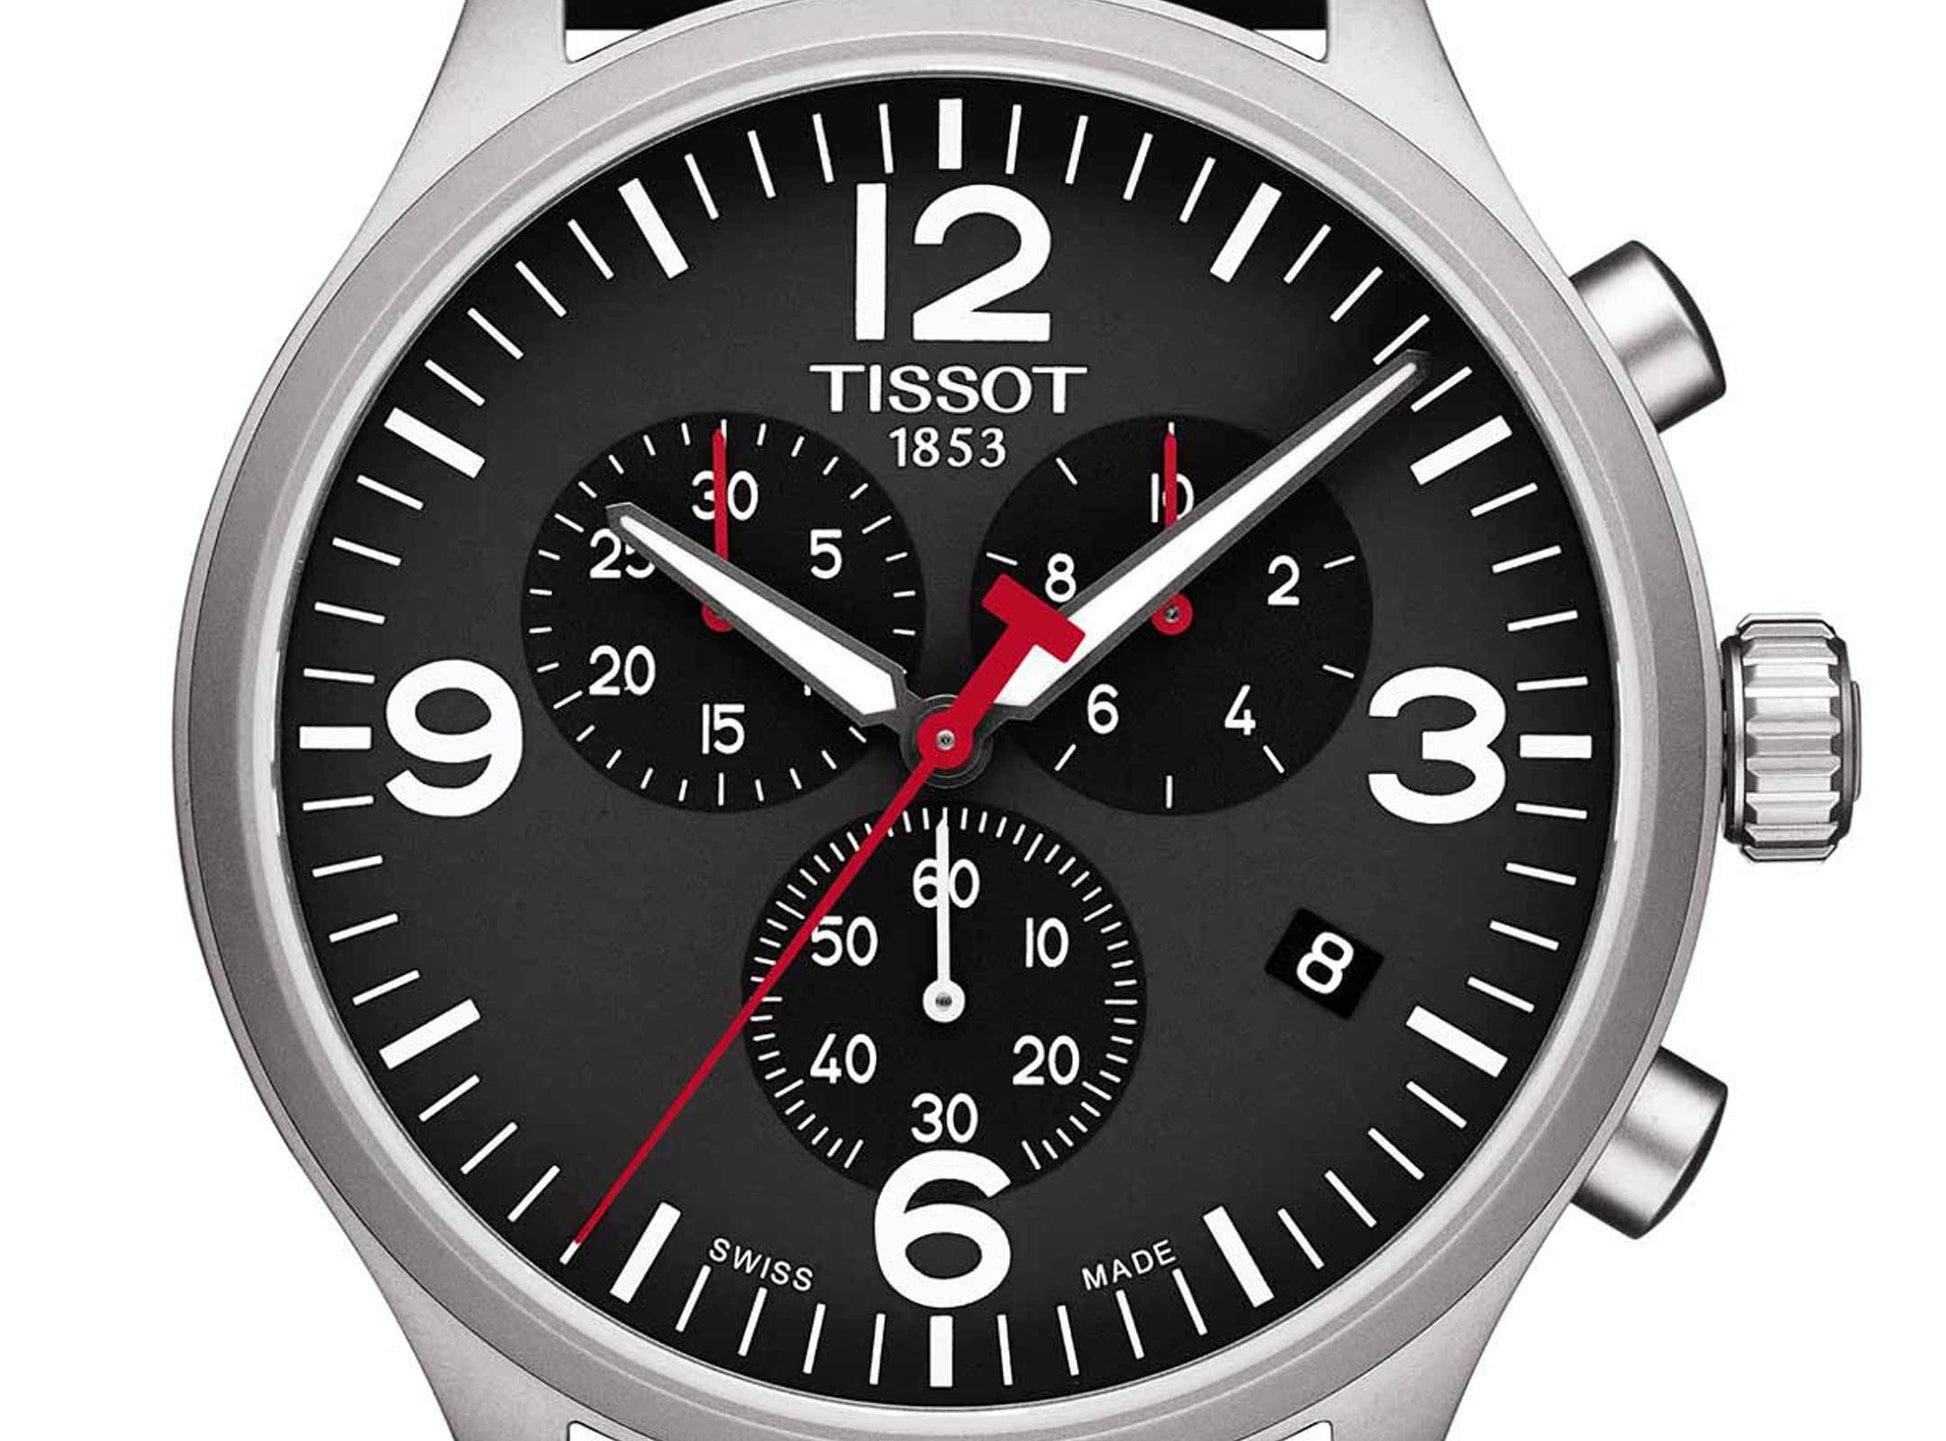 Tissot Chrono XL Chronograph Watch For Men - T116.617.16.057.02